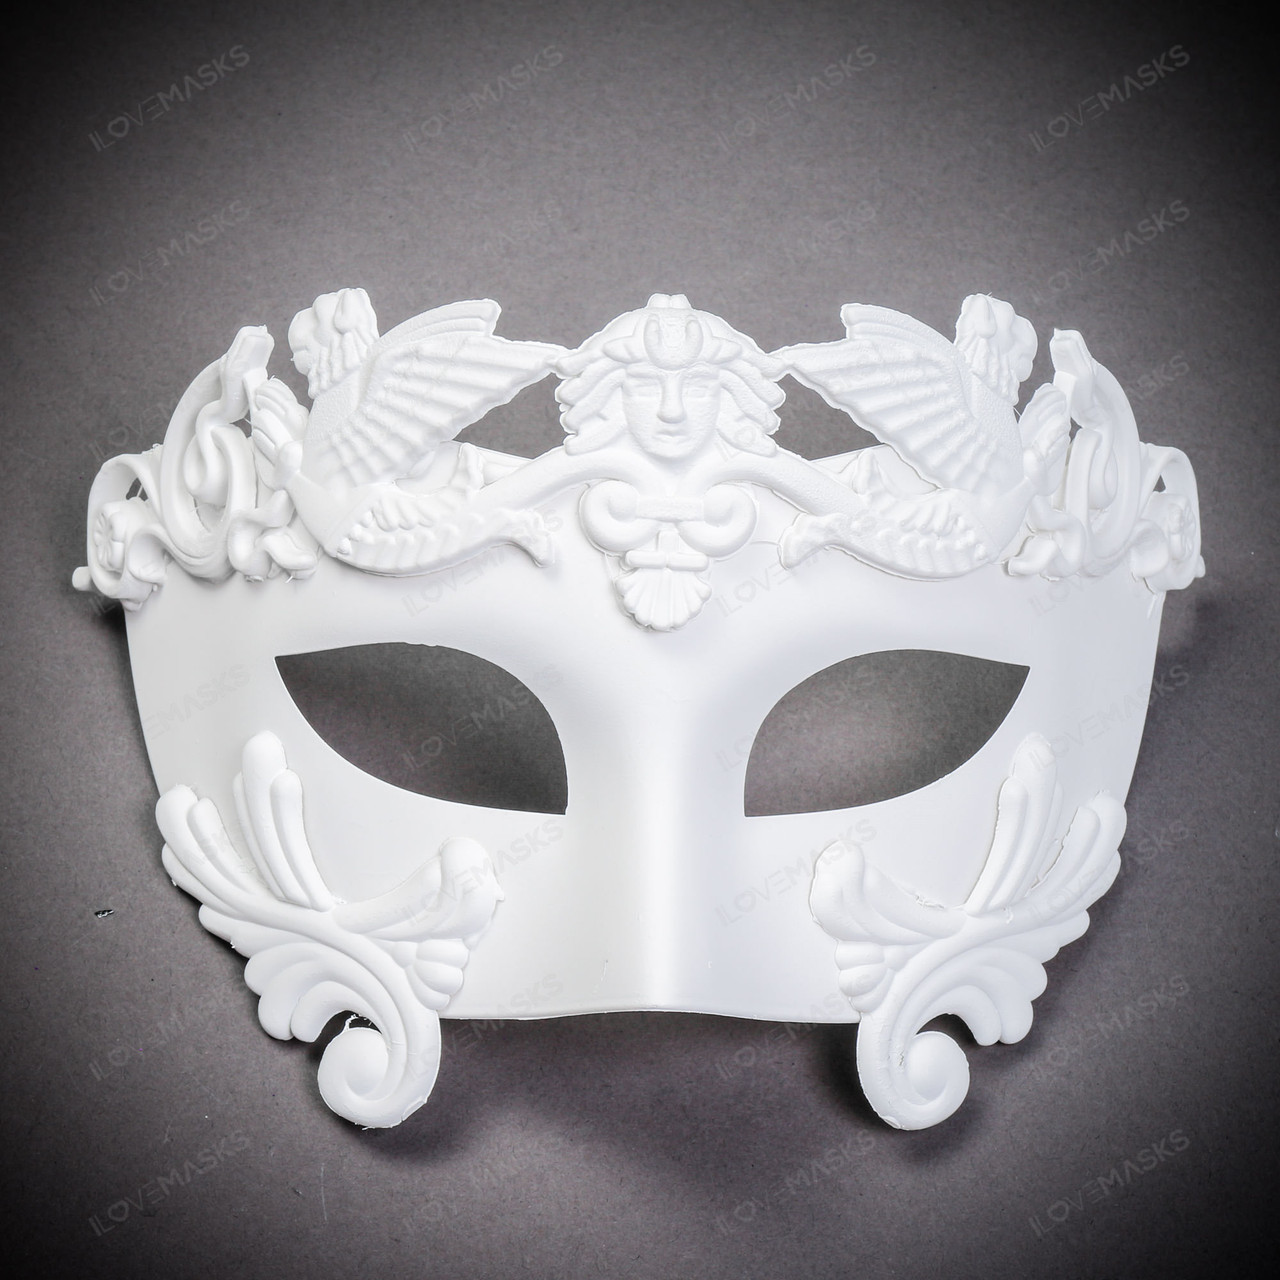 Ansøger bøf århundrede Roman Greek Emperor Masquerade Venetian Unpainted Mask - White -  ILOVEMASKS.COM